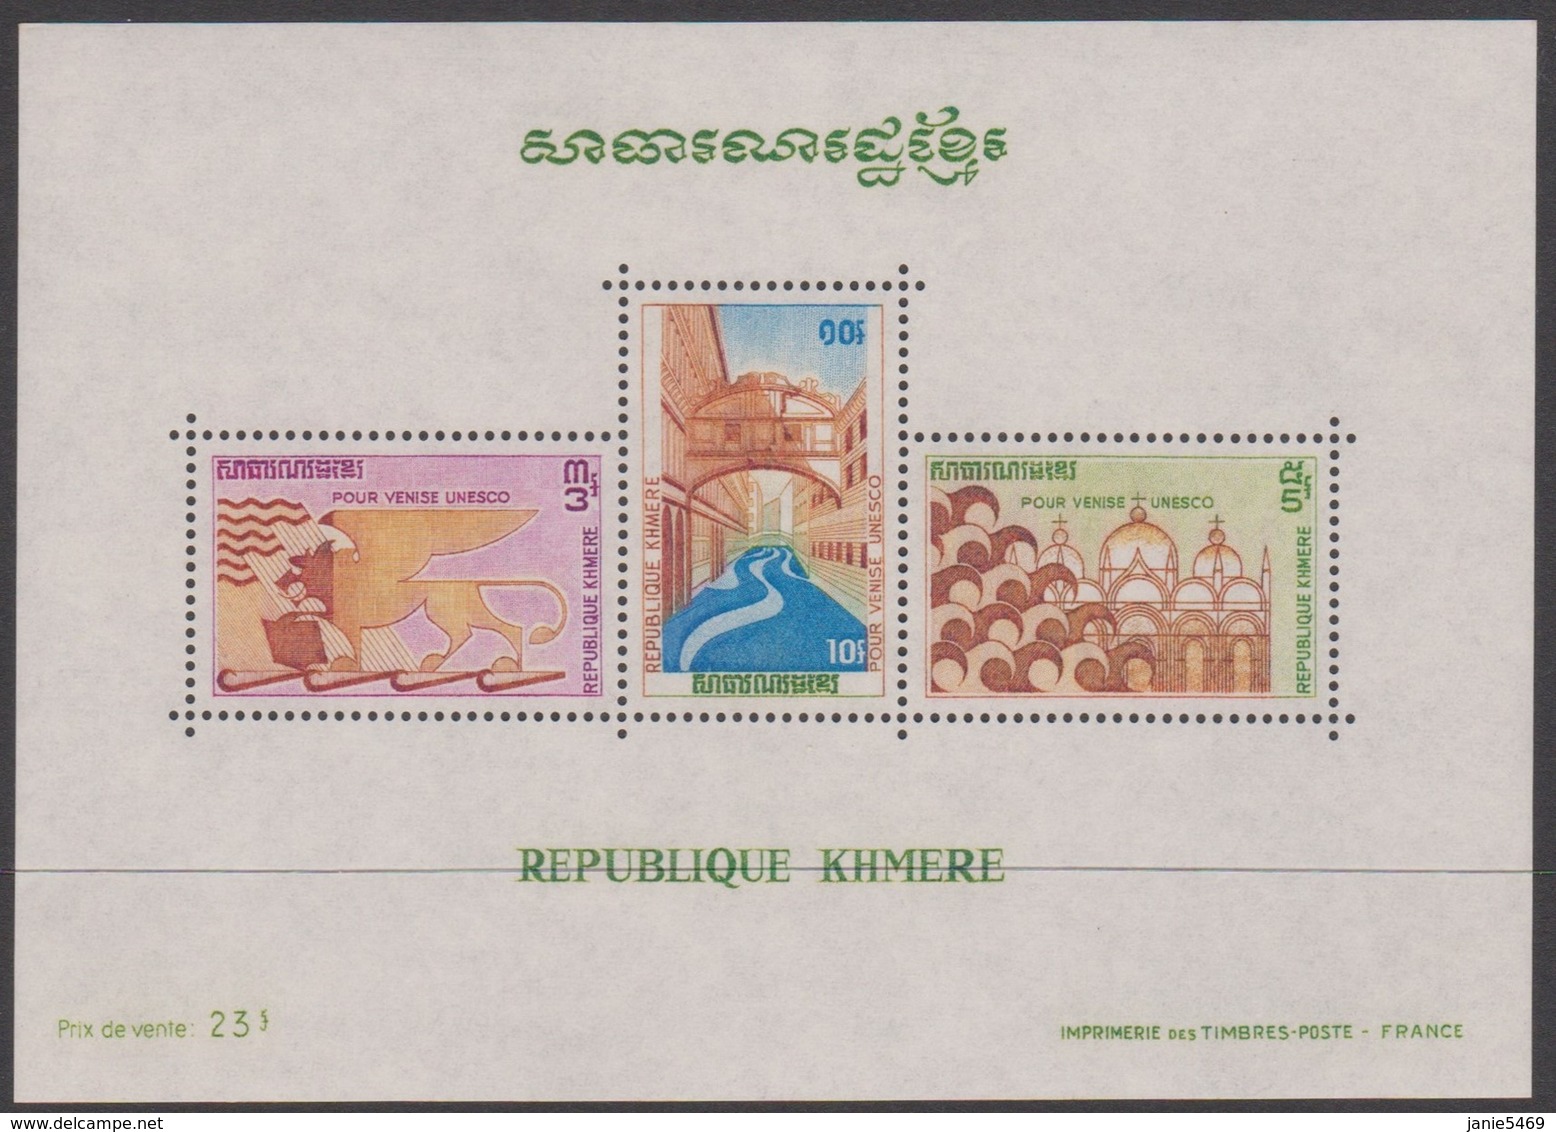 Cambodia Scott 277a Save Venice, Souvenir Sheet, Mint Never Hinged - Cambodge